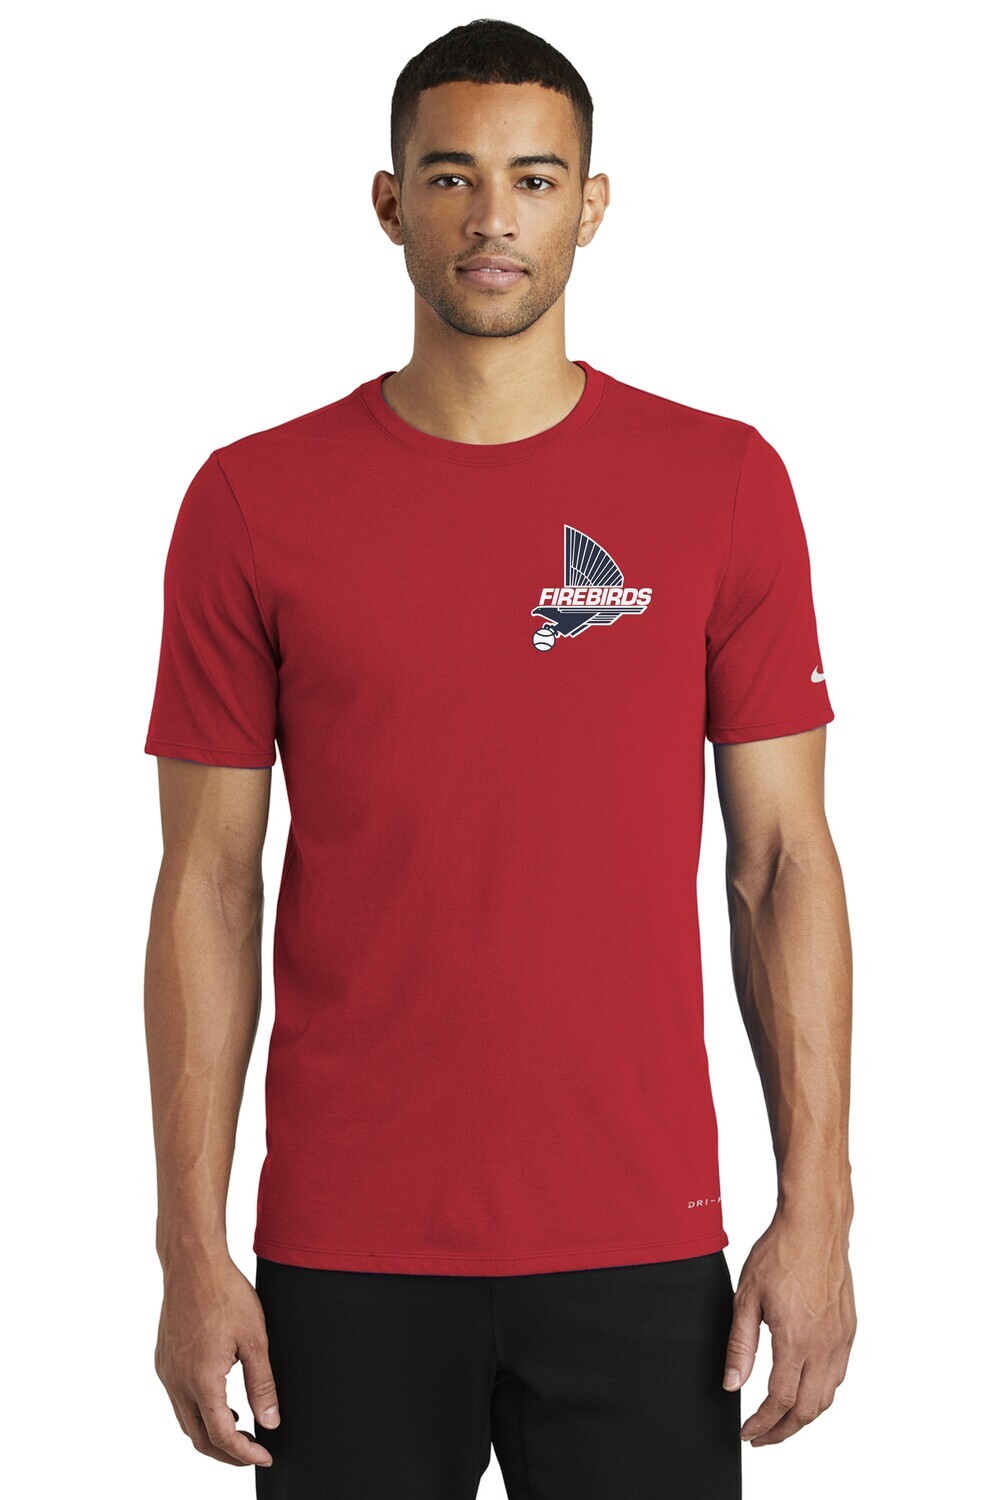 Firebirds Nike DriFit T-Shirt